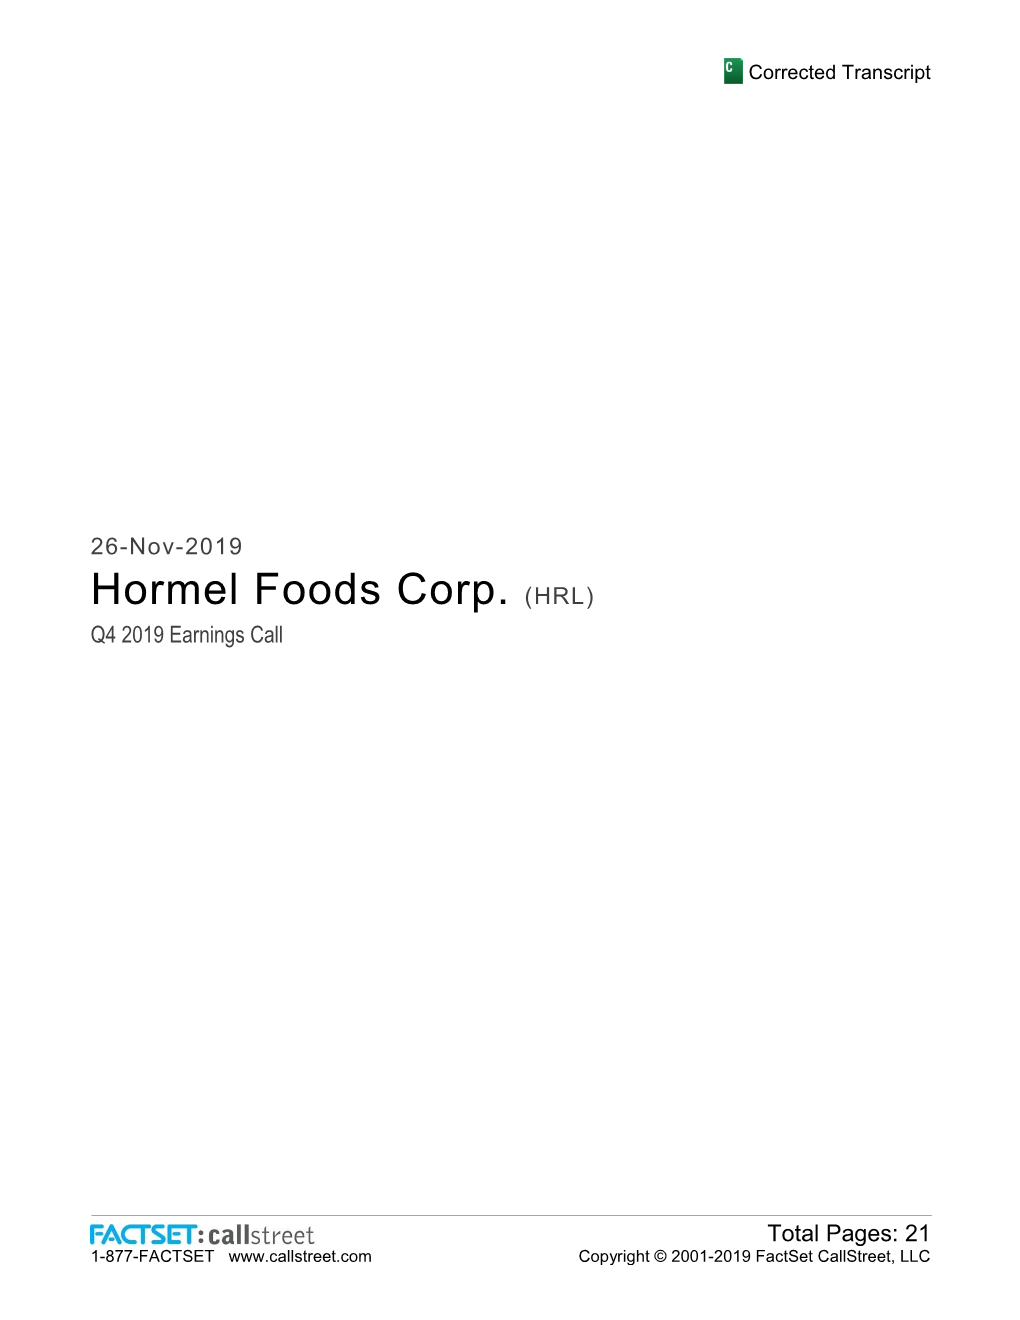 Hormel Foods Corp. (HRL) Q4 2019 Earnings Call